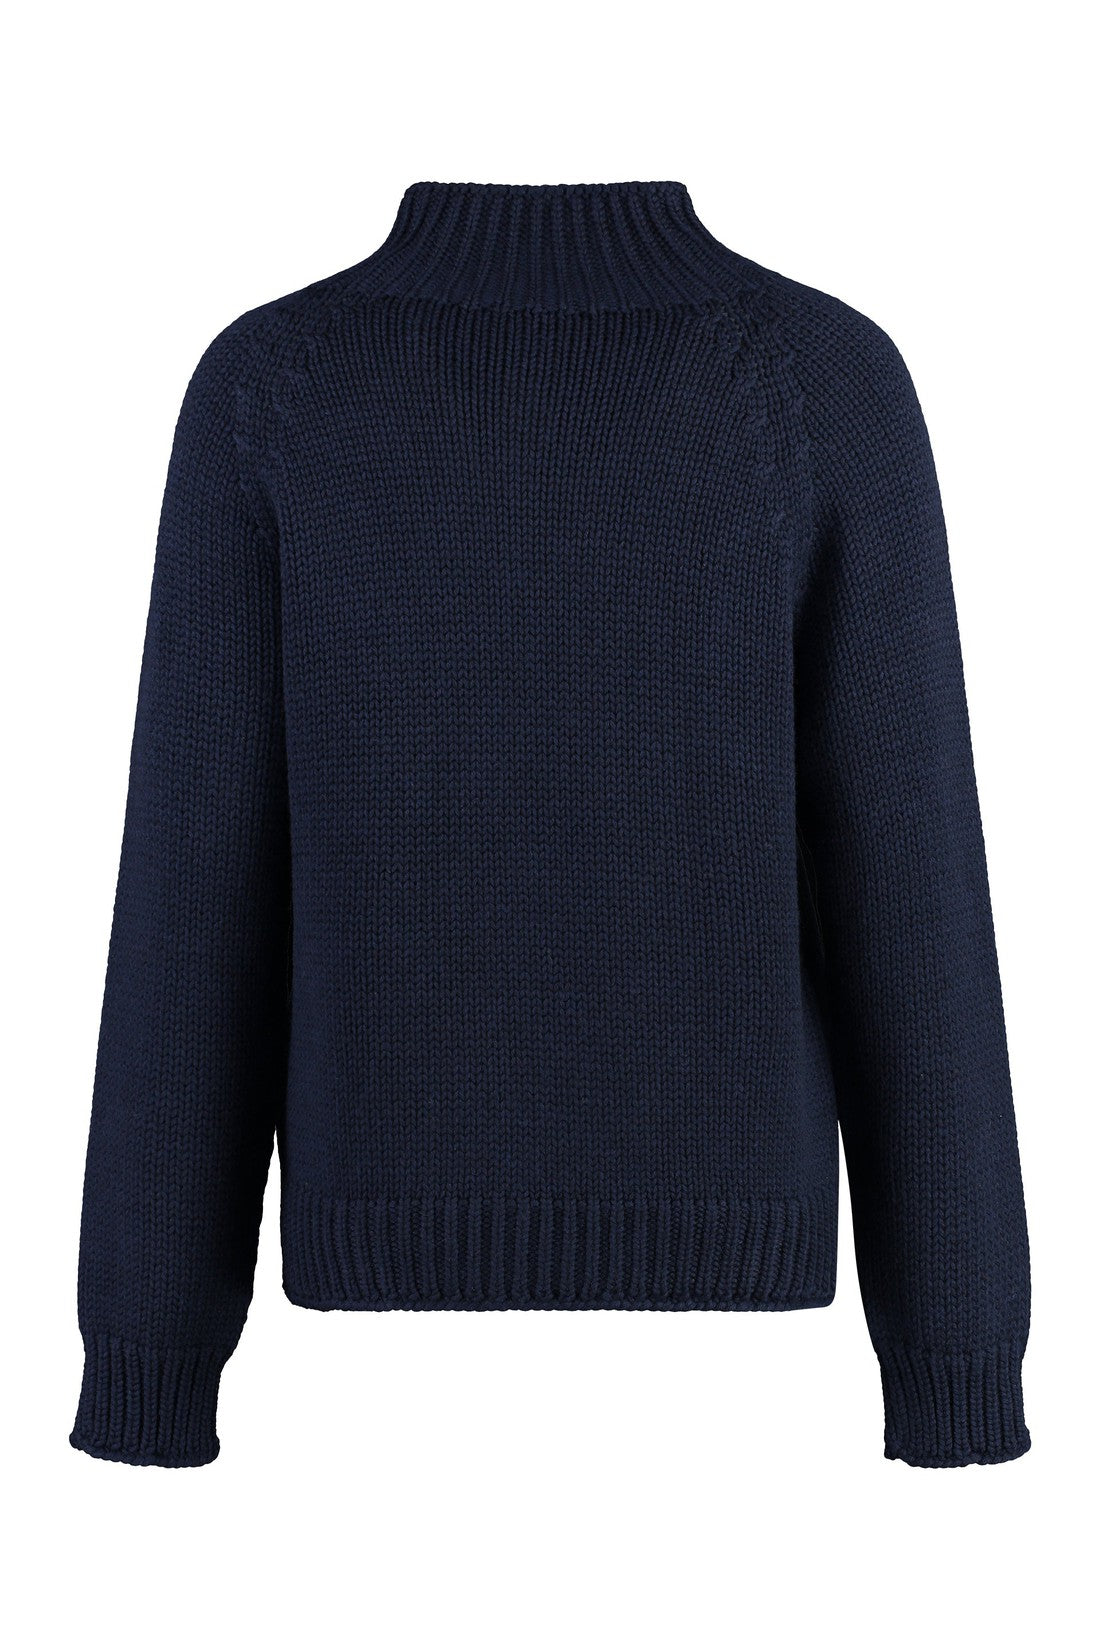 Fabiana Filippi-OUTLET-SALE-Wool turtleneck sweater-ARCHIVIST